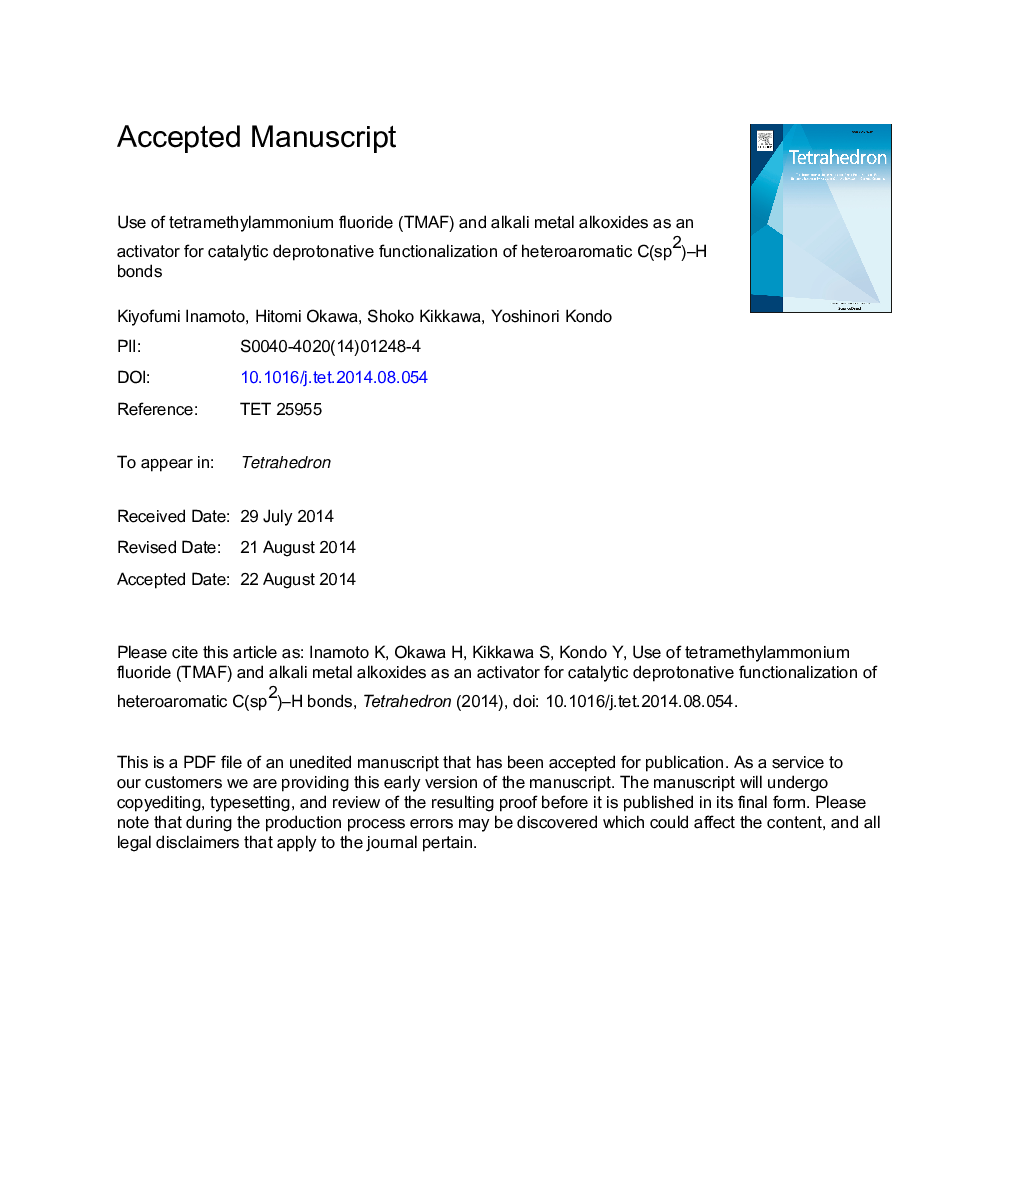 Use of tetramethylammonium fluoride (TMAF) and alkali metal alkoxides as an activator for catalytic deprotonative functionalization of heteroaromatic C(sp2)-H bonds